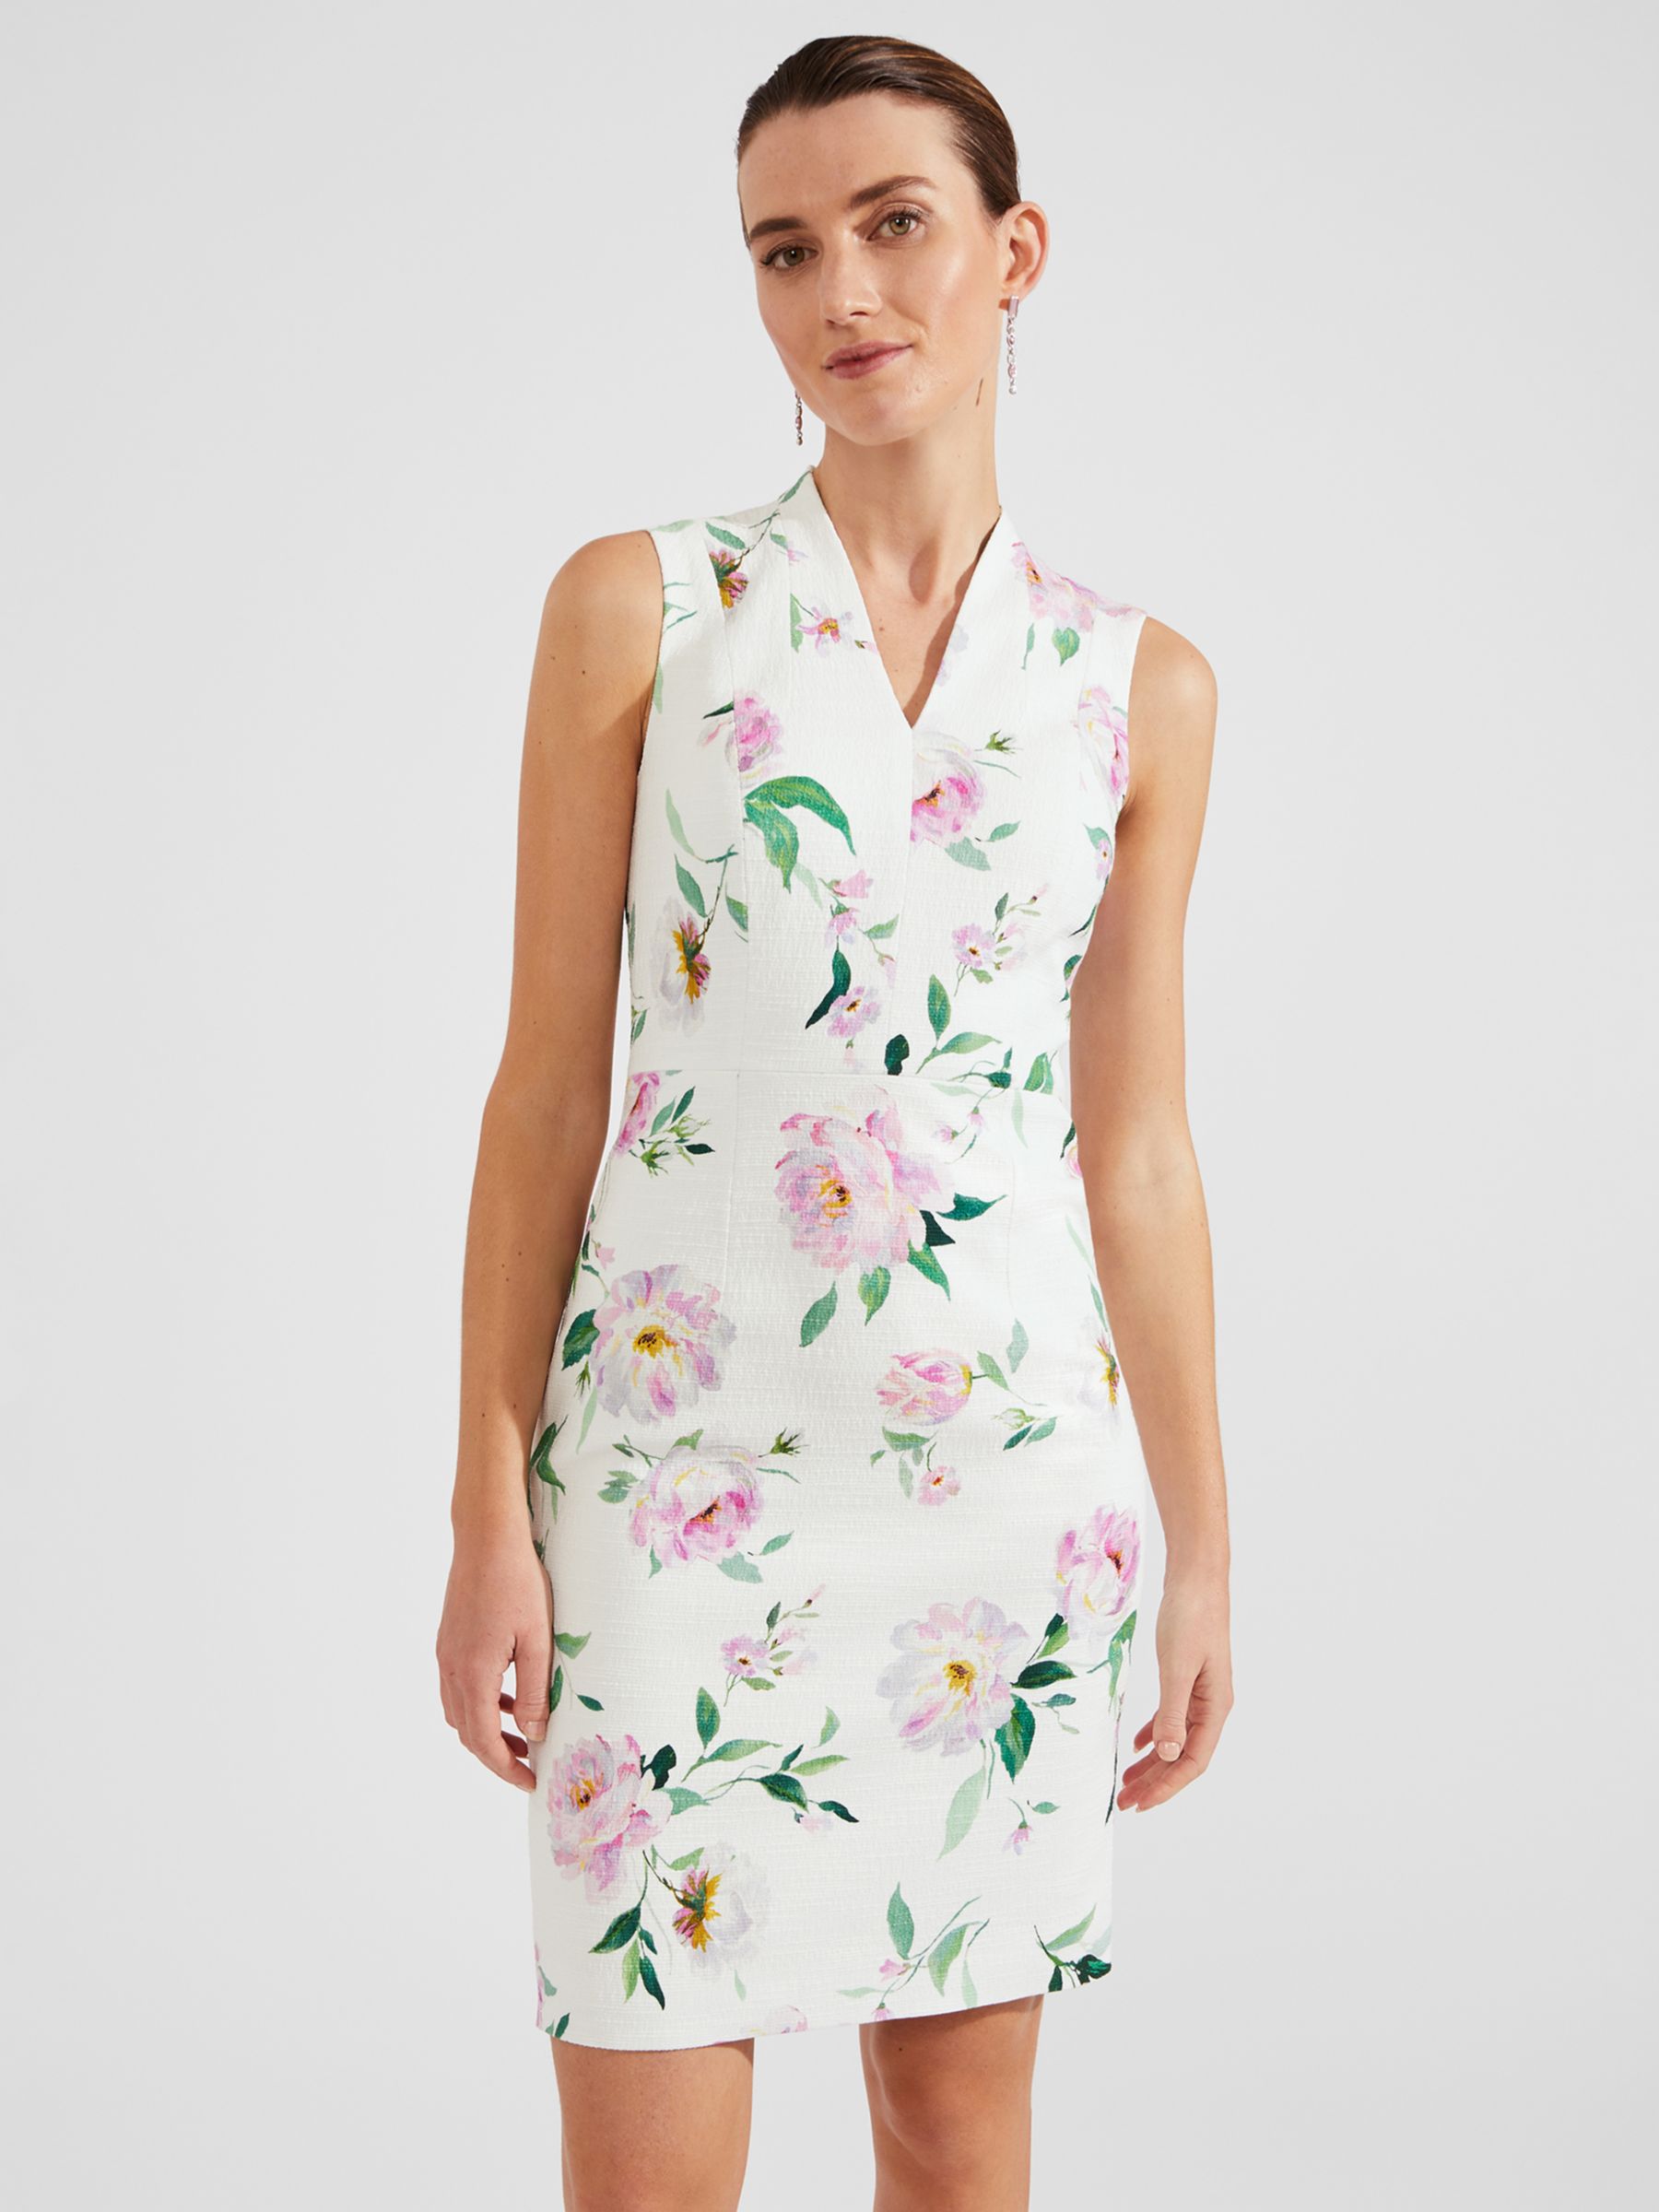 Hobbs Petite Suzanna Floral Print Knee Length Dress, Ivory/Multi, 10